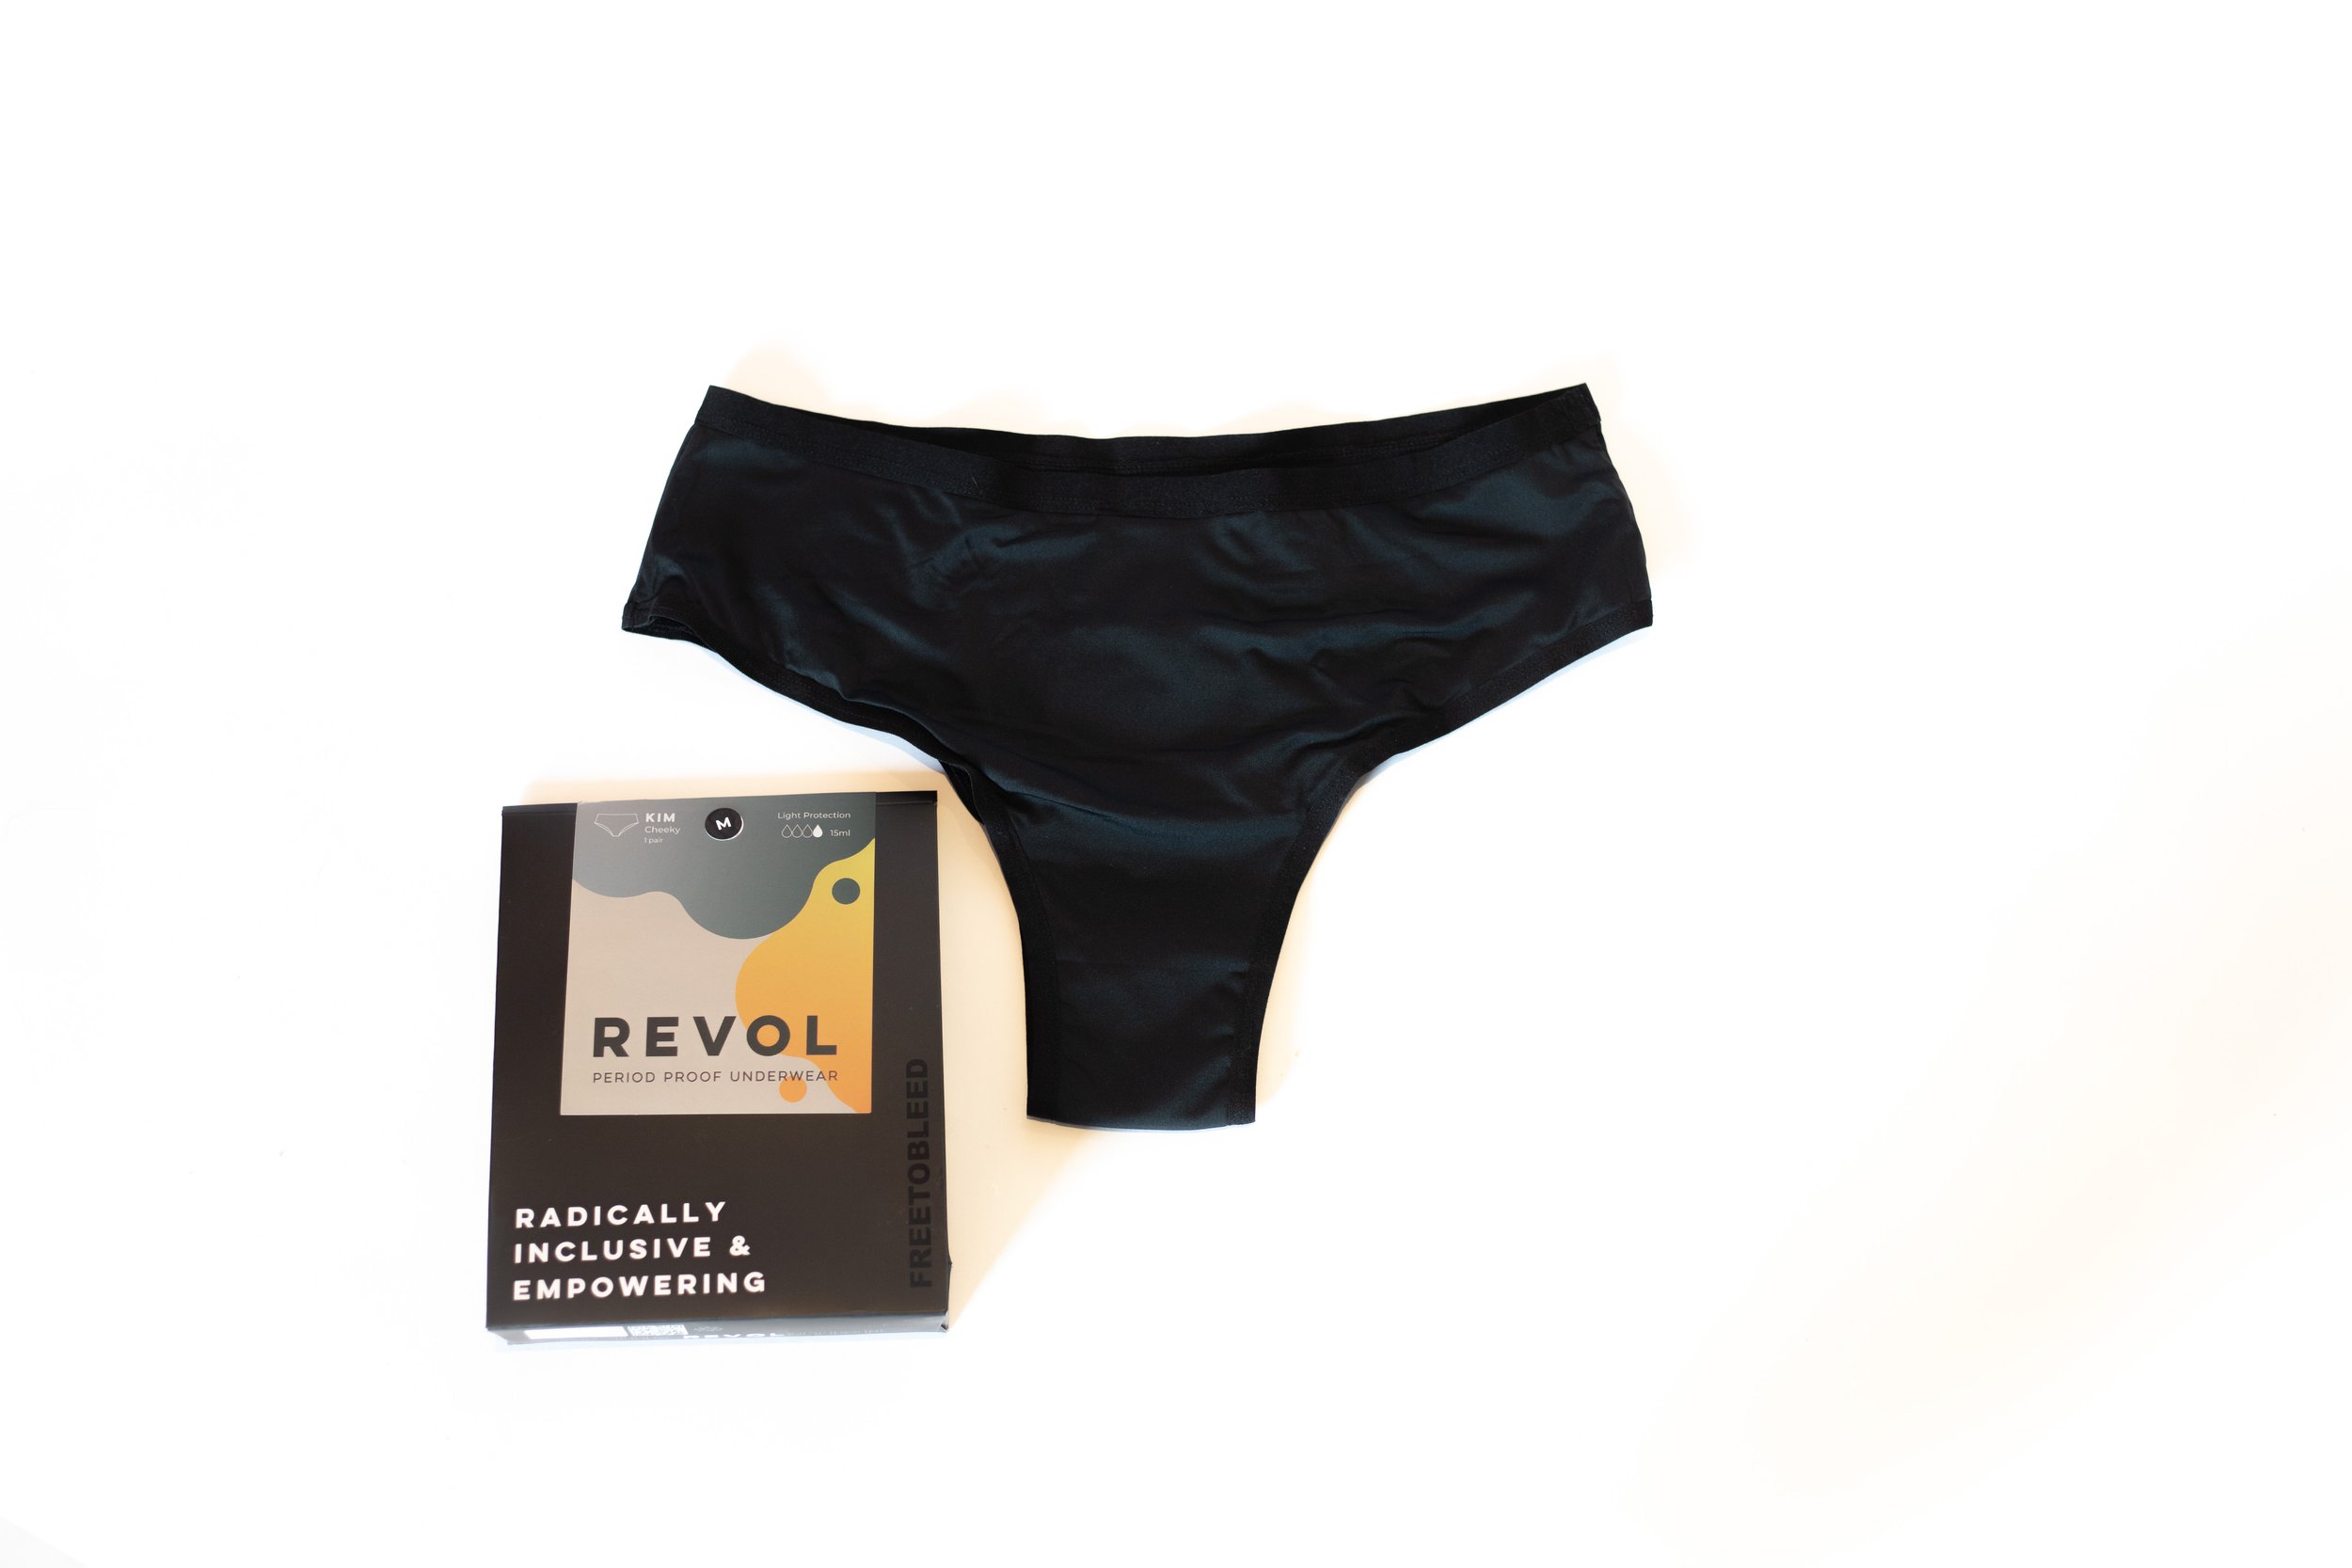 Disposable period underwear : r/SacramentoBuyNothing